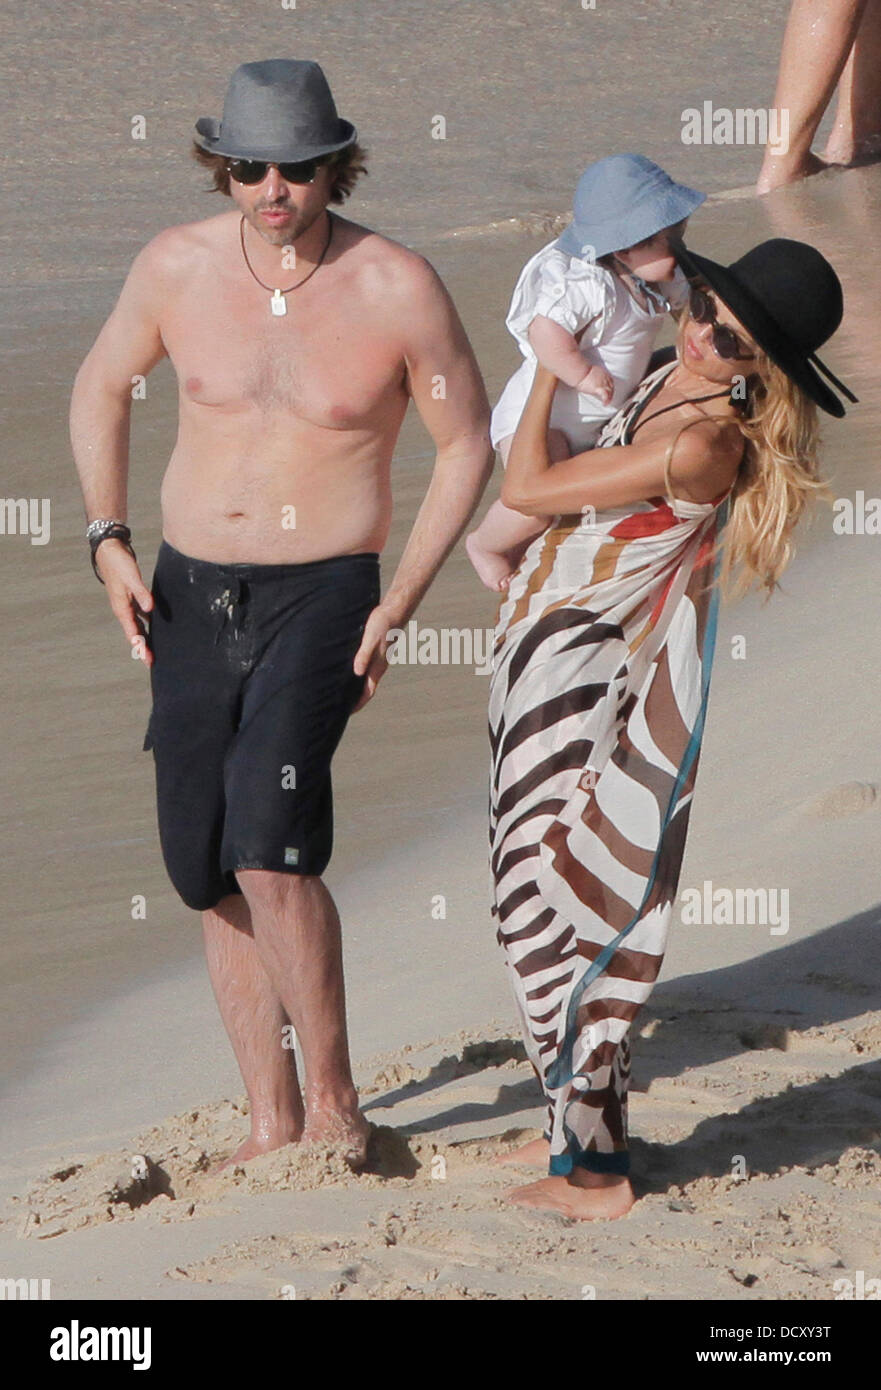 Rachel Zoe looks sensational in dreamy beach selfie with husband Rodger  Berman